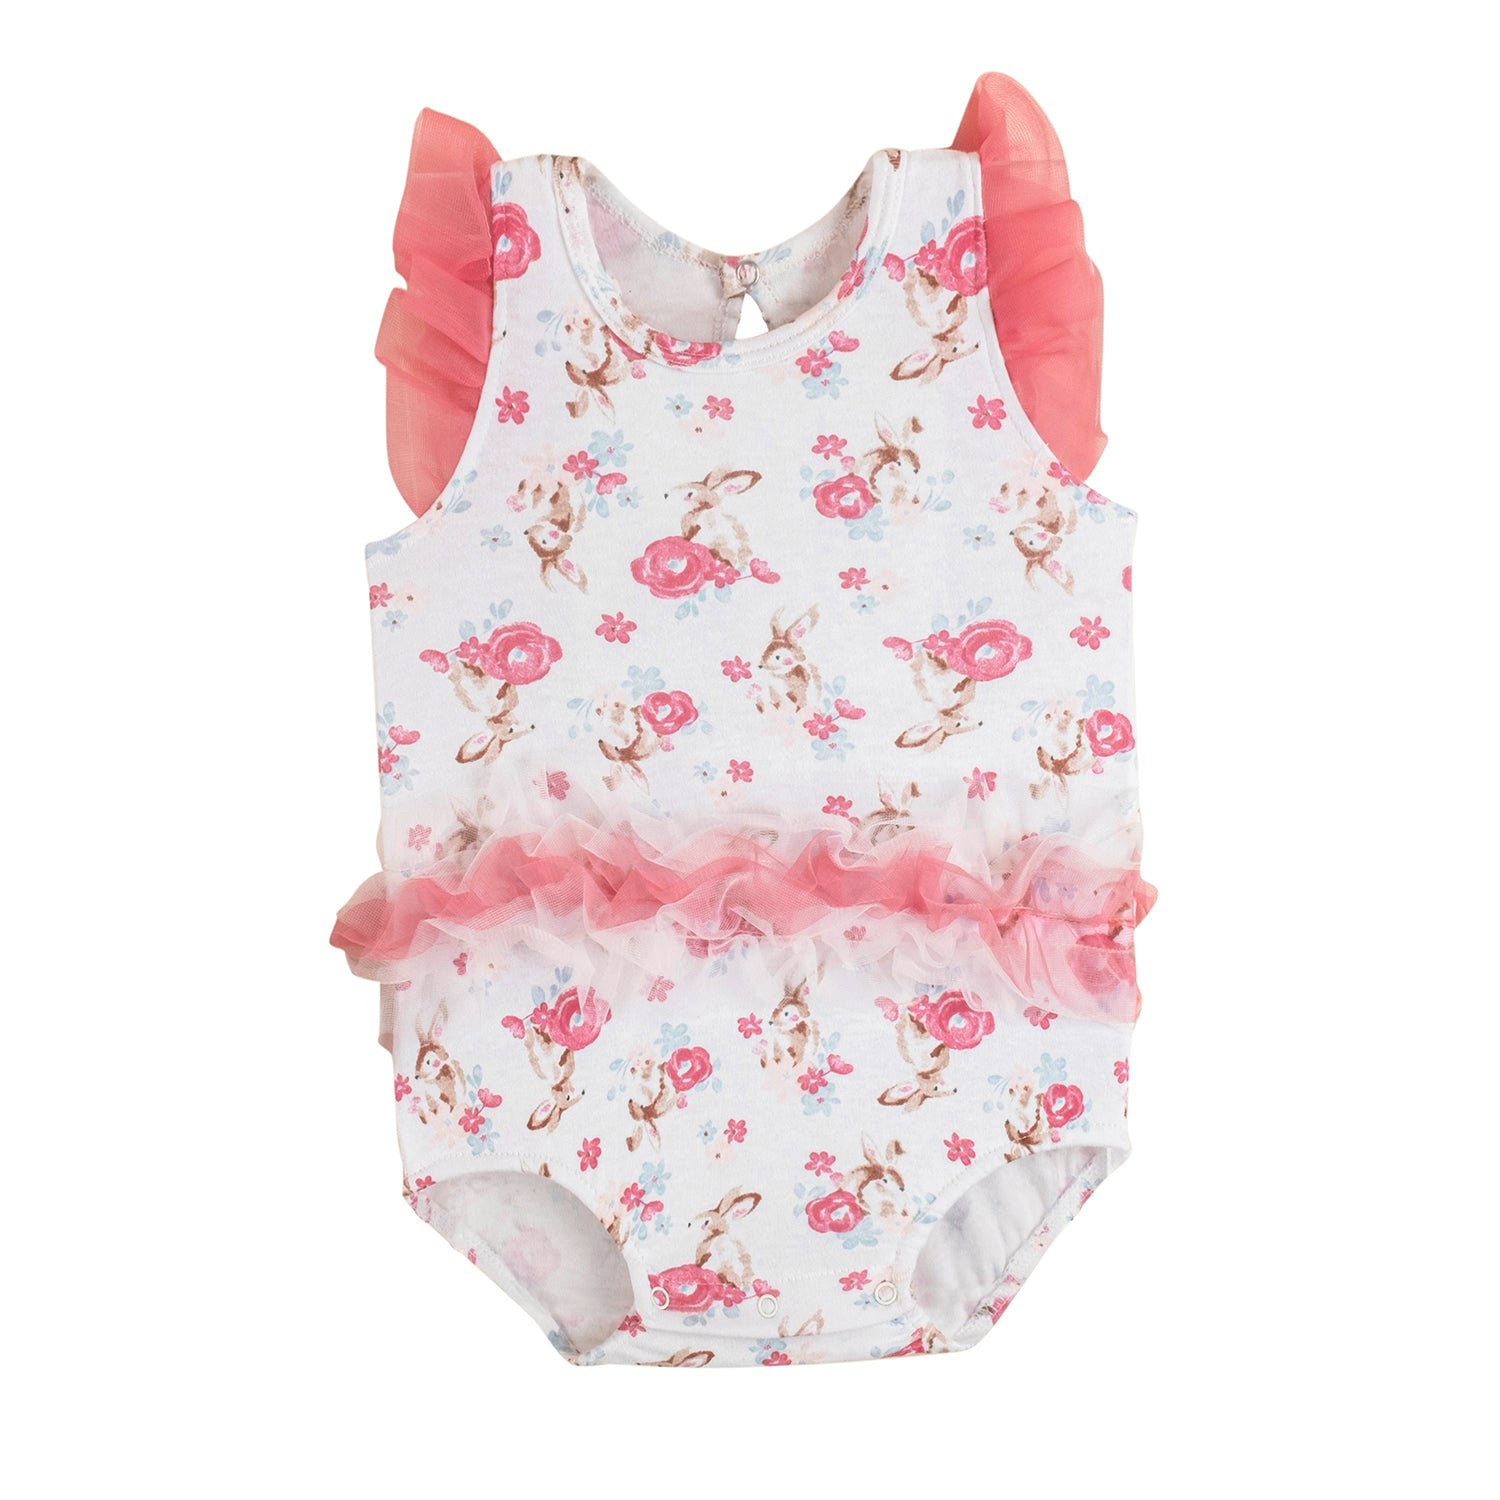 Baby Moo Garden Gift Set 3 Piece With Bodysuit, Socks And Headband - Pink, White